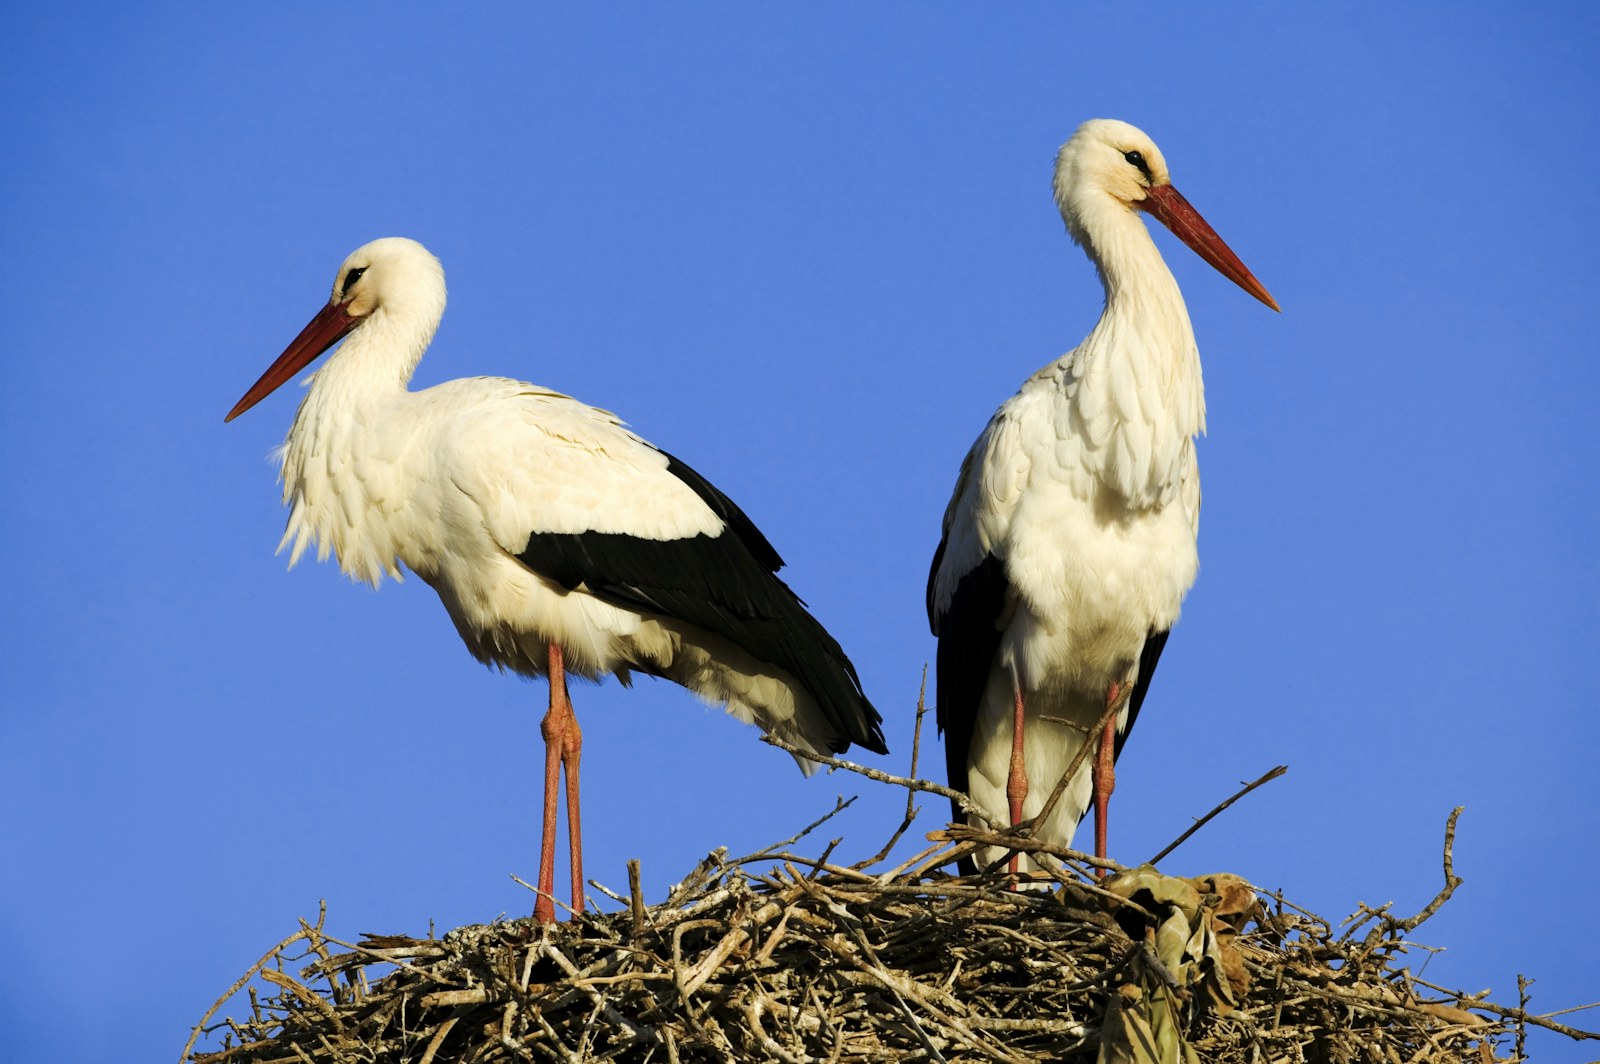 Wild storks